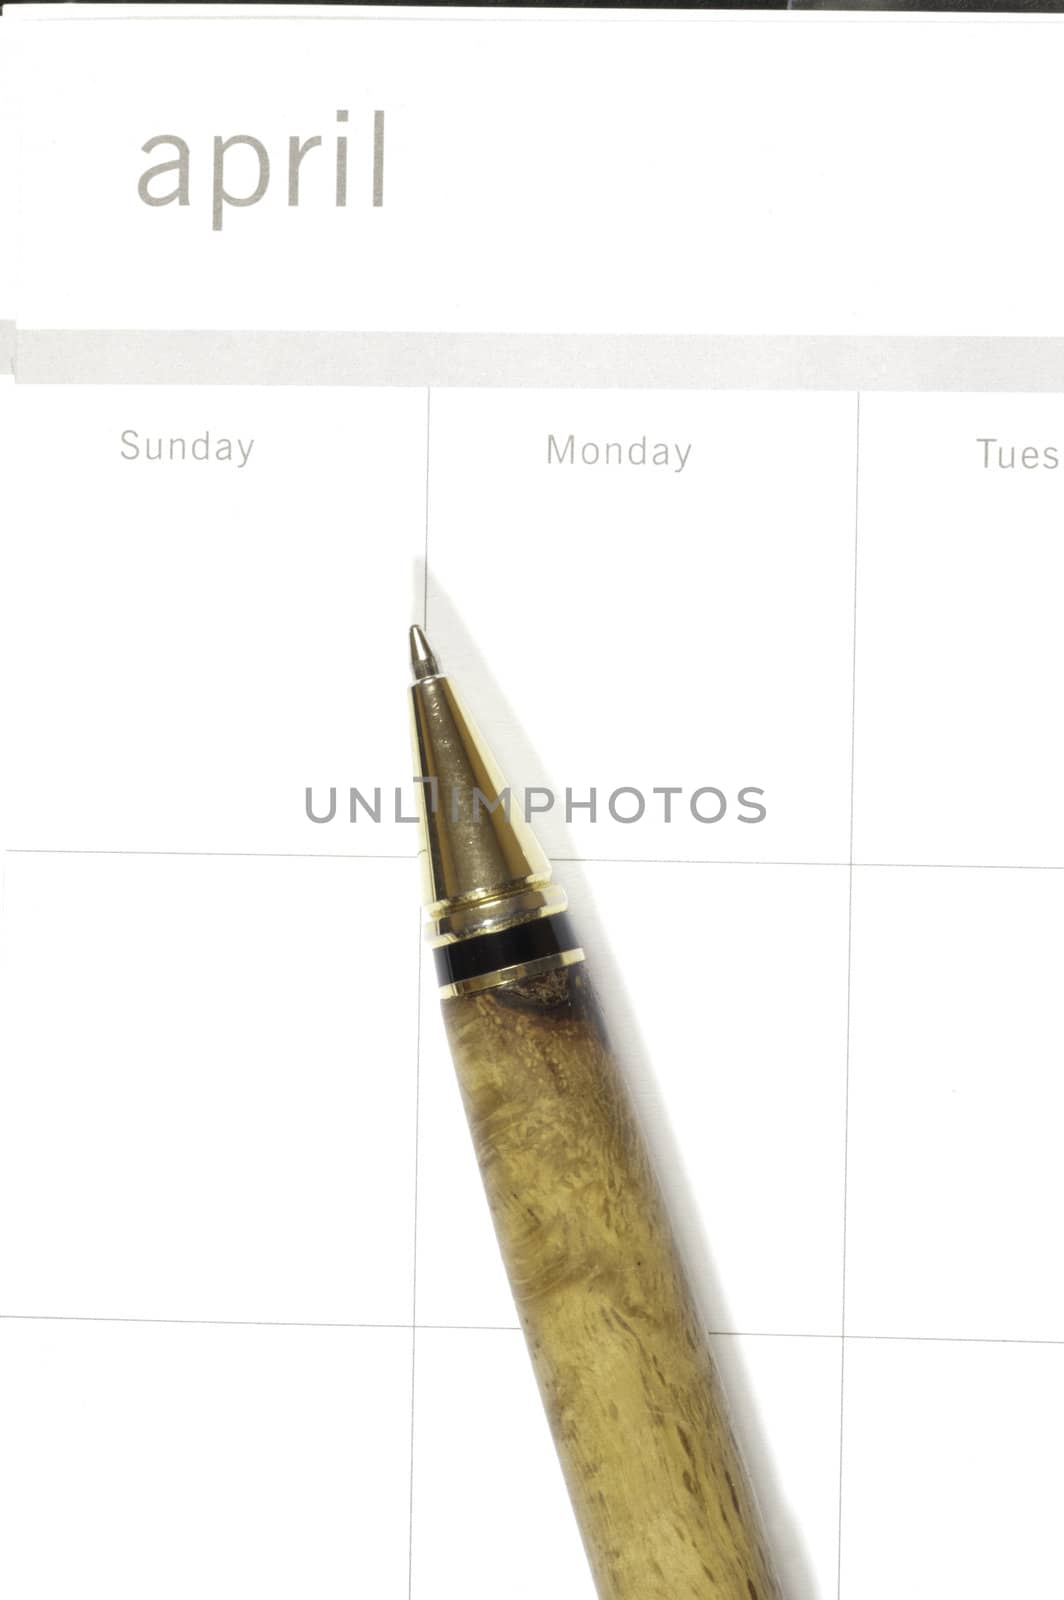 pen ready to use on April by jeffbanke